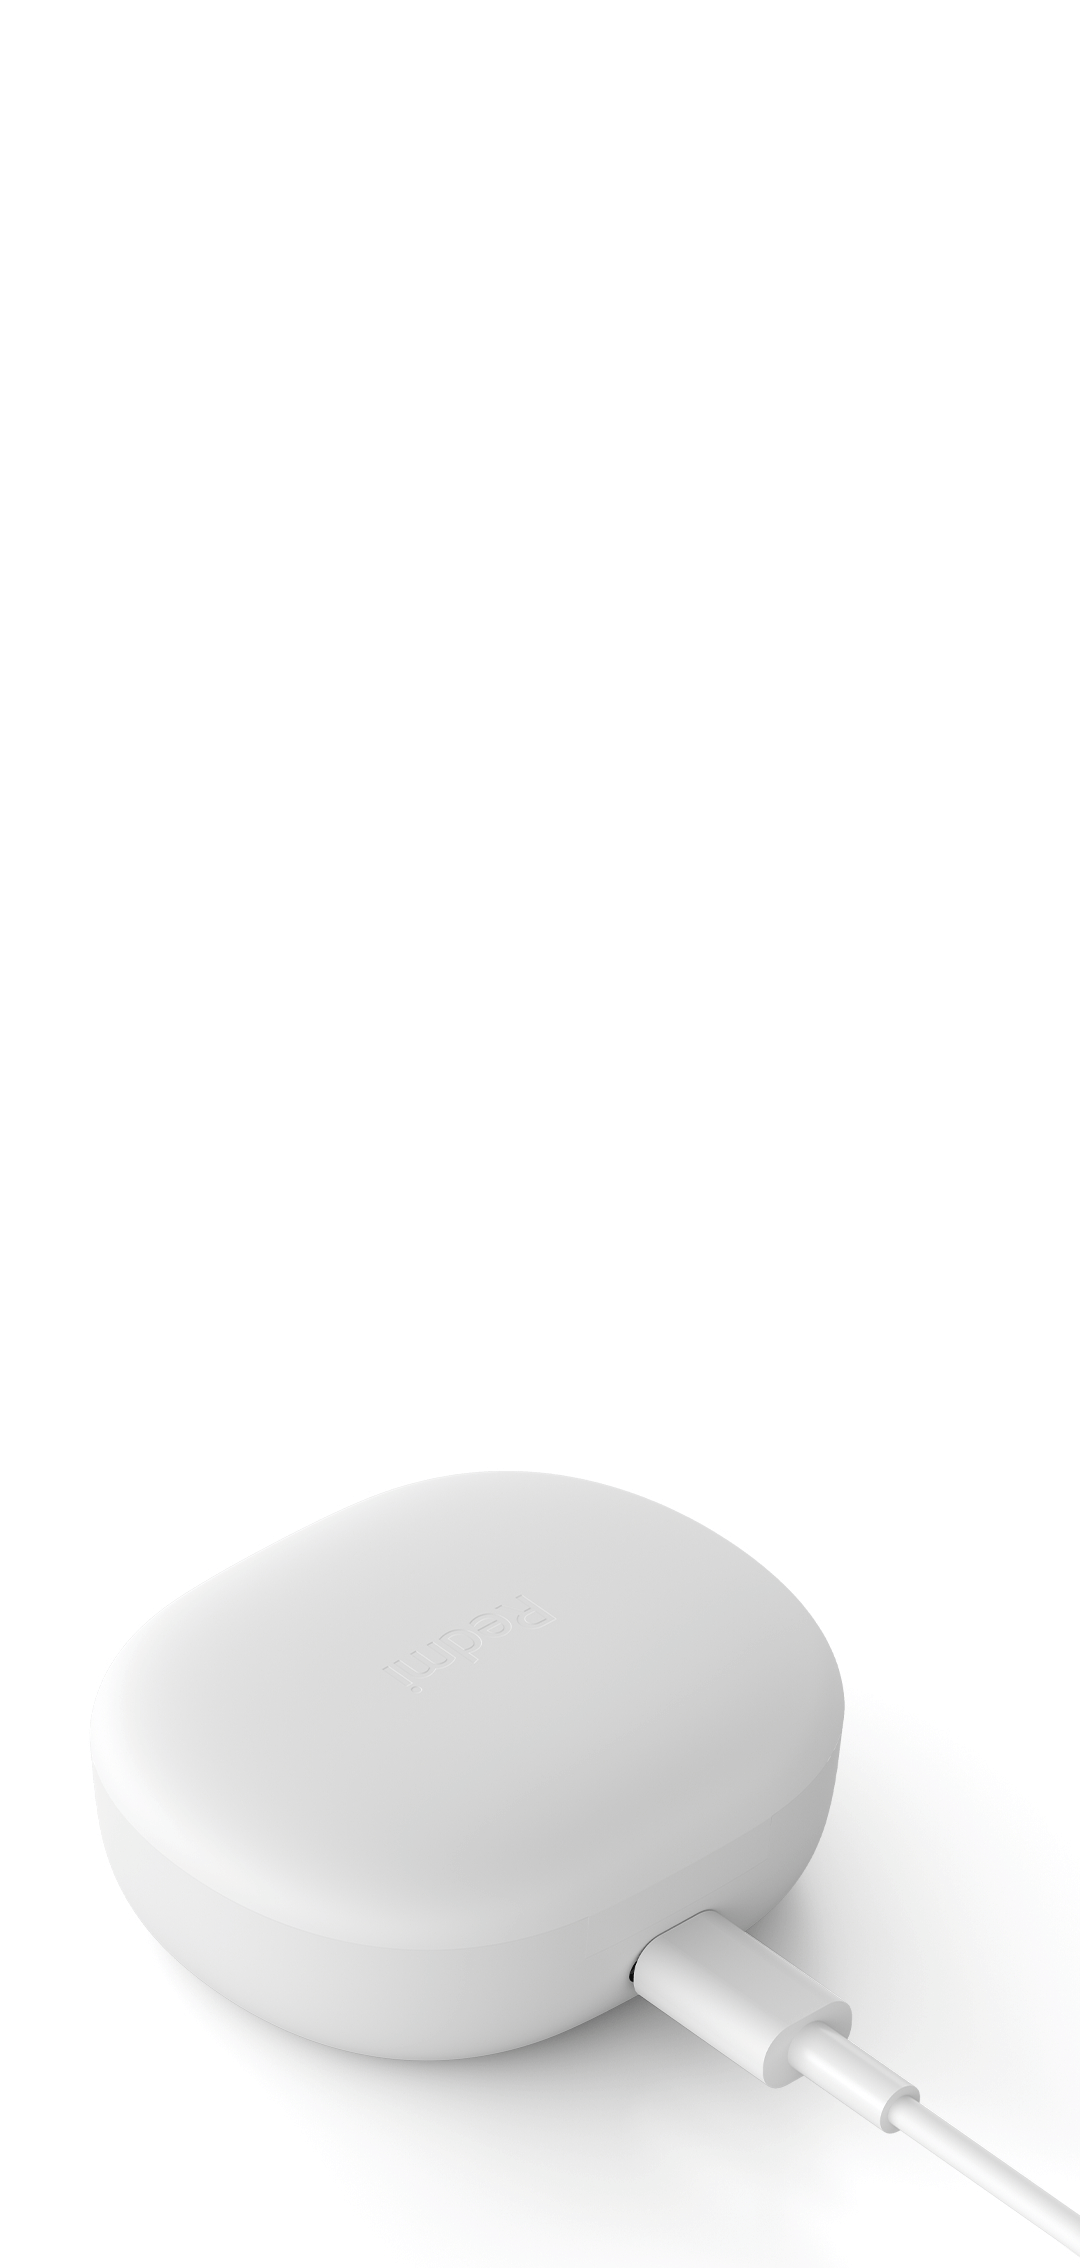 Redmi Buds 4 Lite (100% Original Xiaomi Malaysia) White